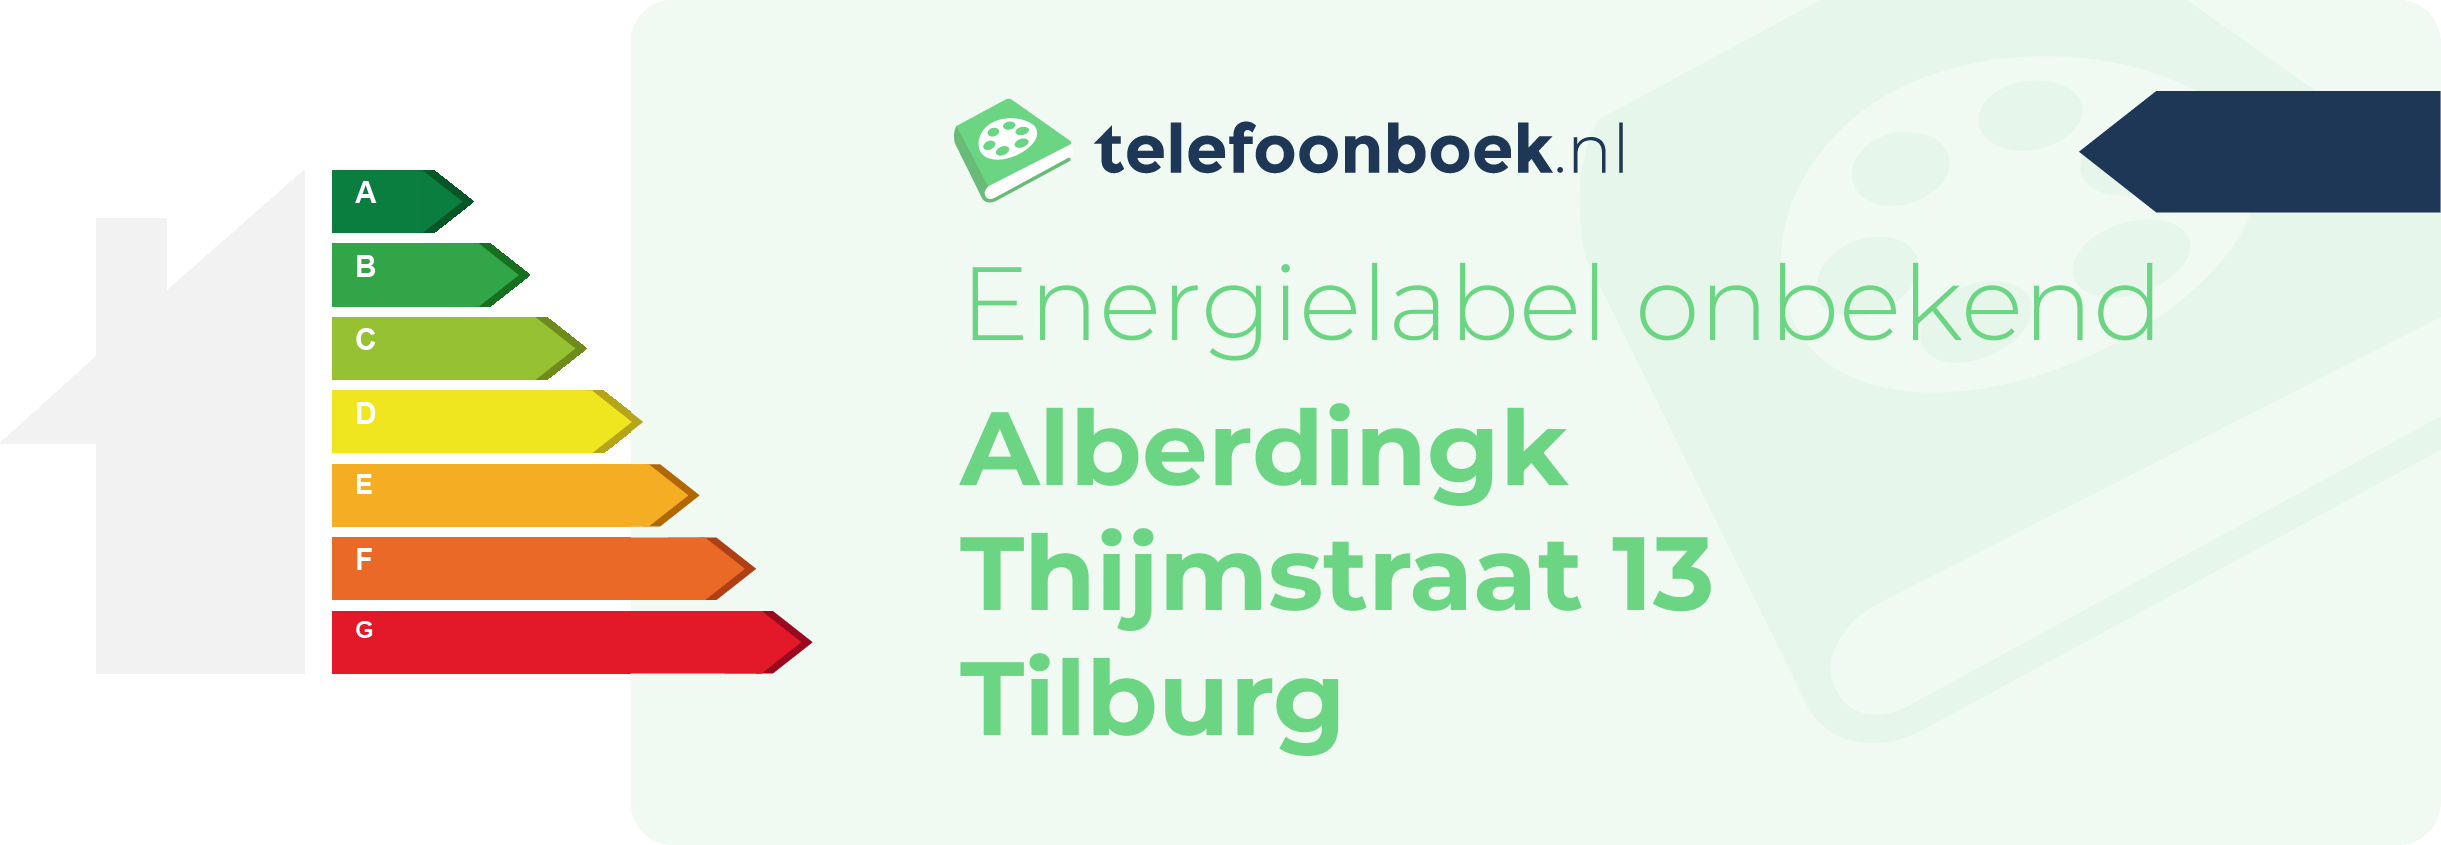 Energielabel Alberdingk Thijmstraat 13 Tilburg